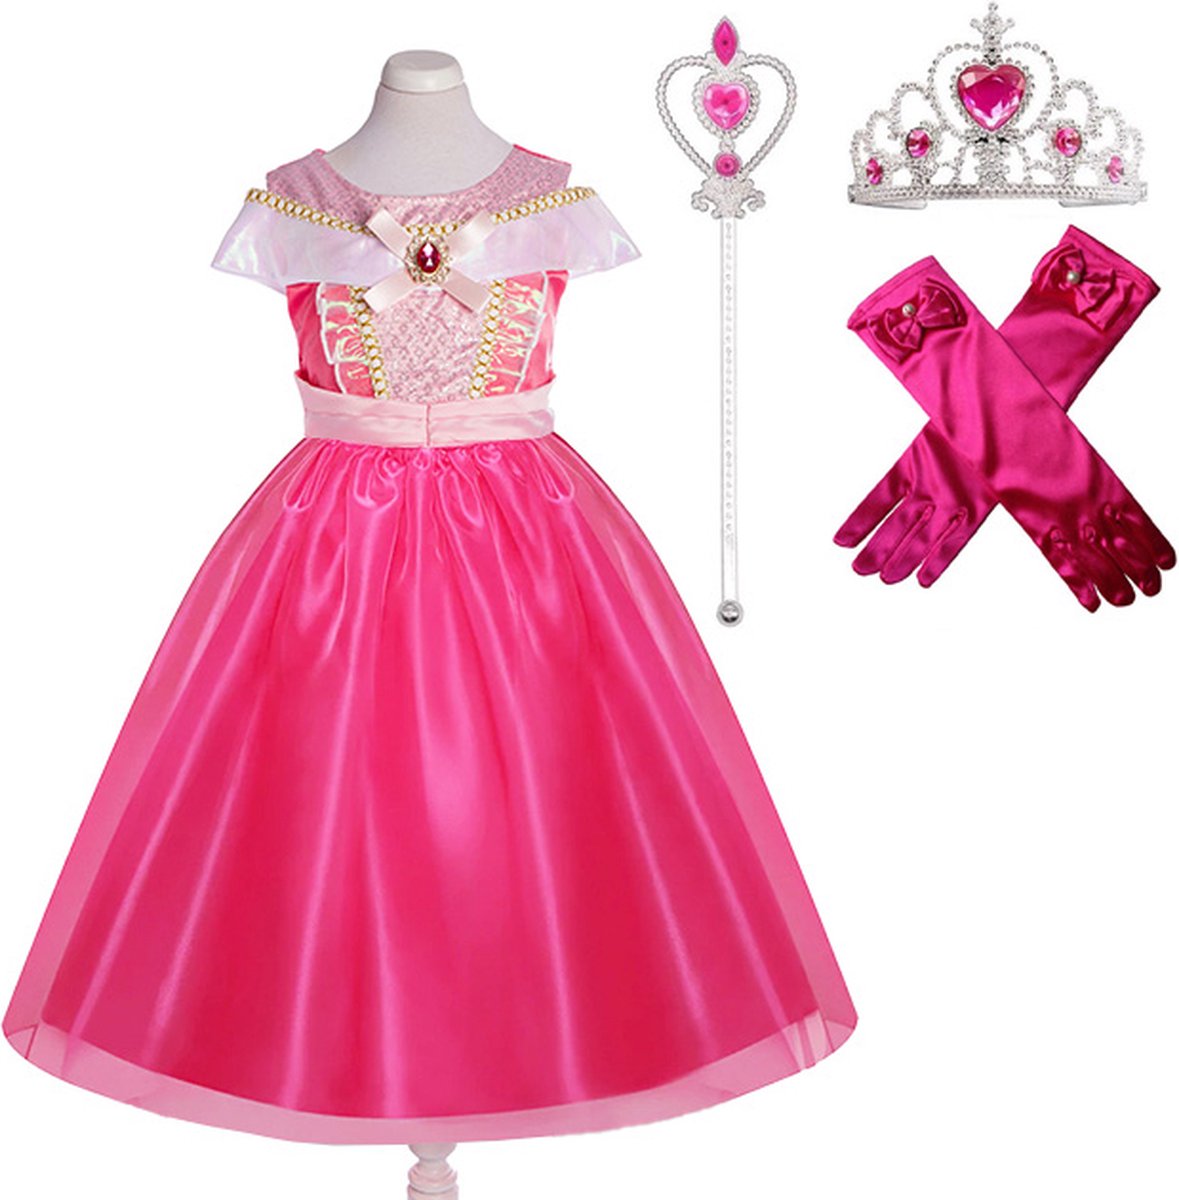 Mooie Doornroosje jurk Prinsessenjurk Maat: 134/140 ( 9-10 jaar) + kroon + staf + handschoenen verkleedkleding meisje